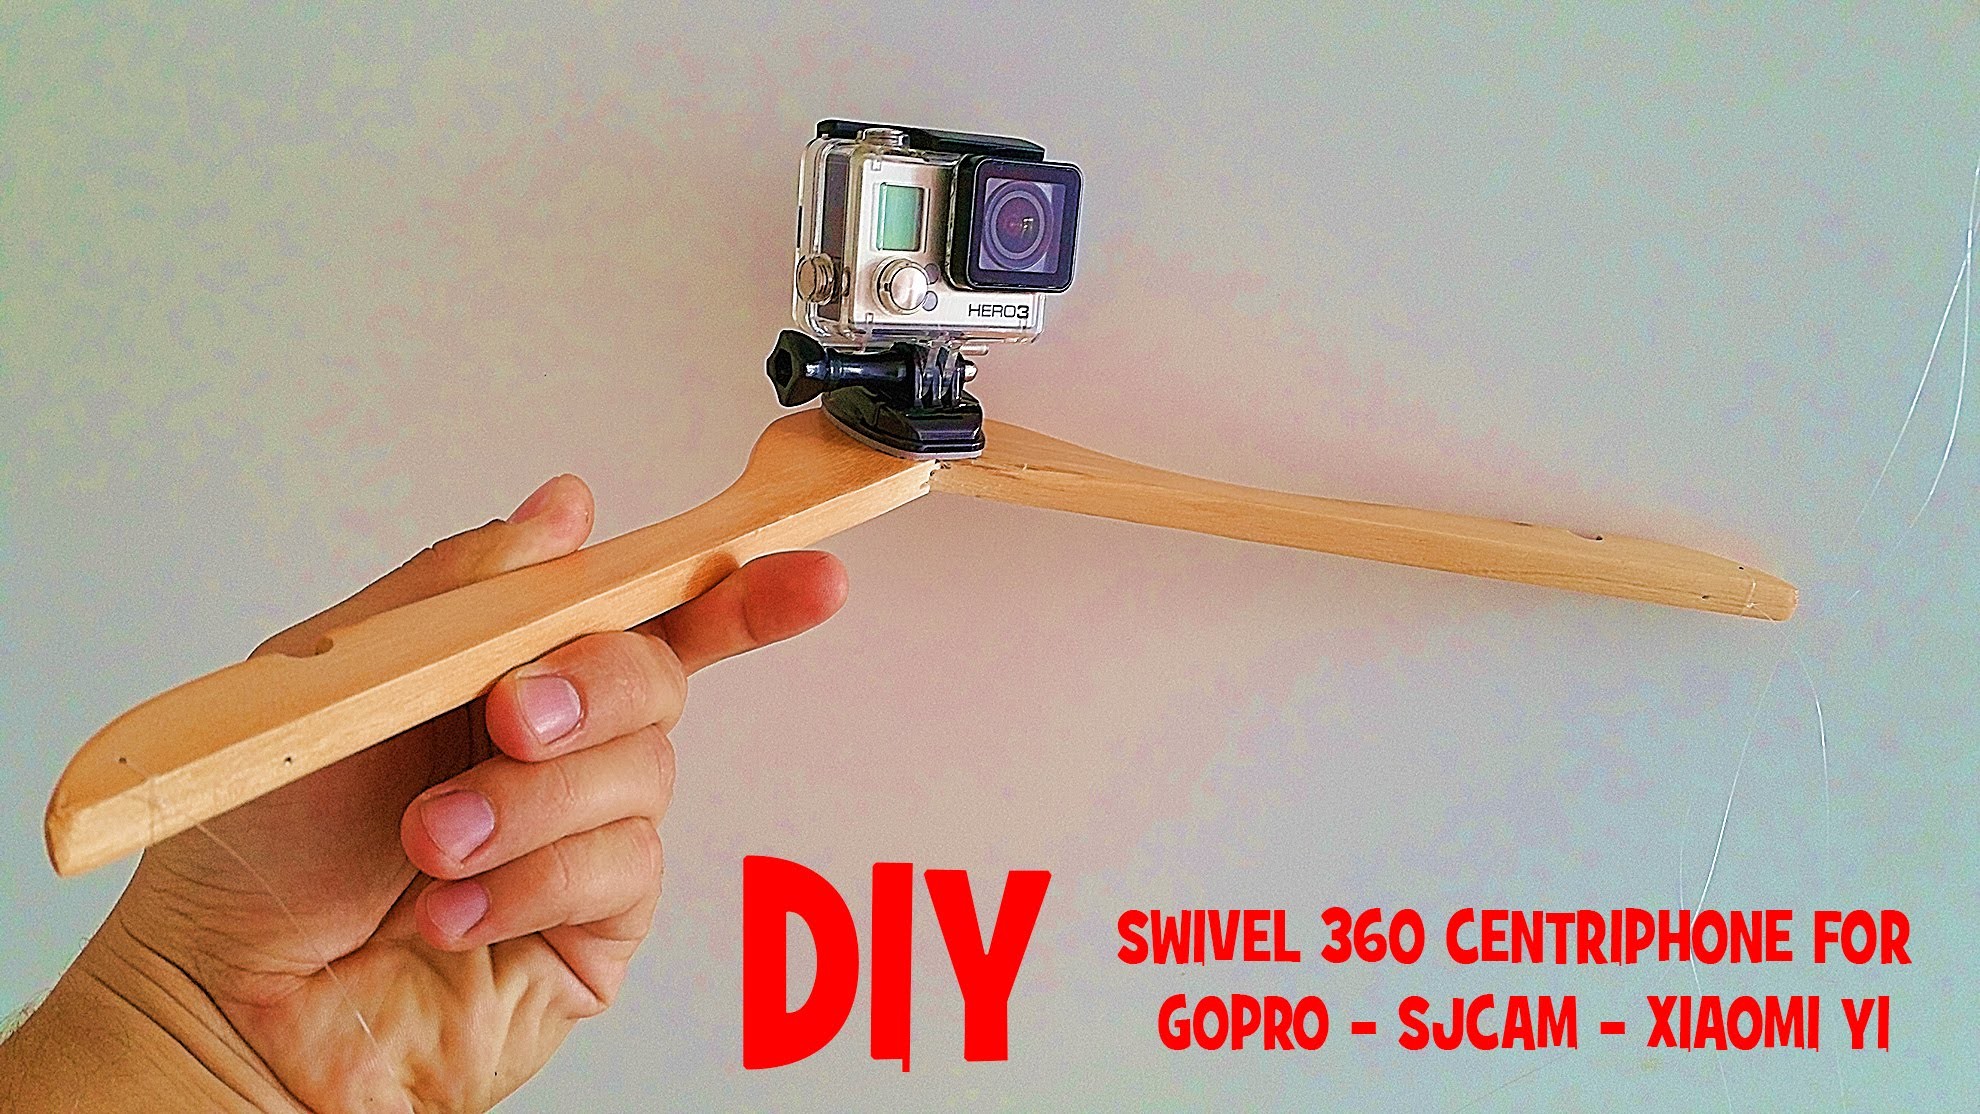 DIY 360 SWIVEL CENTRIPHONE GOPRO 4k - How to make it